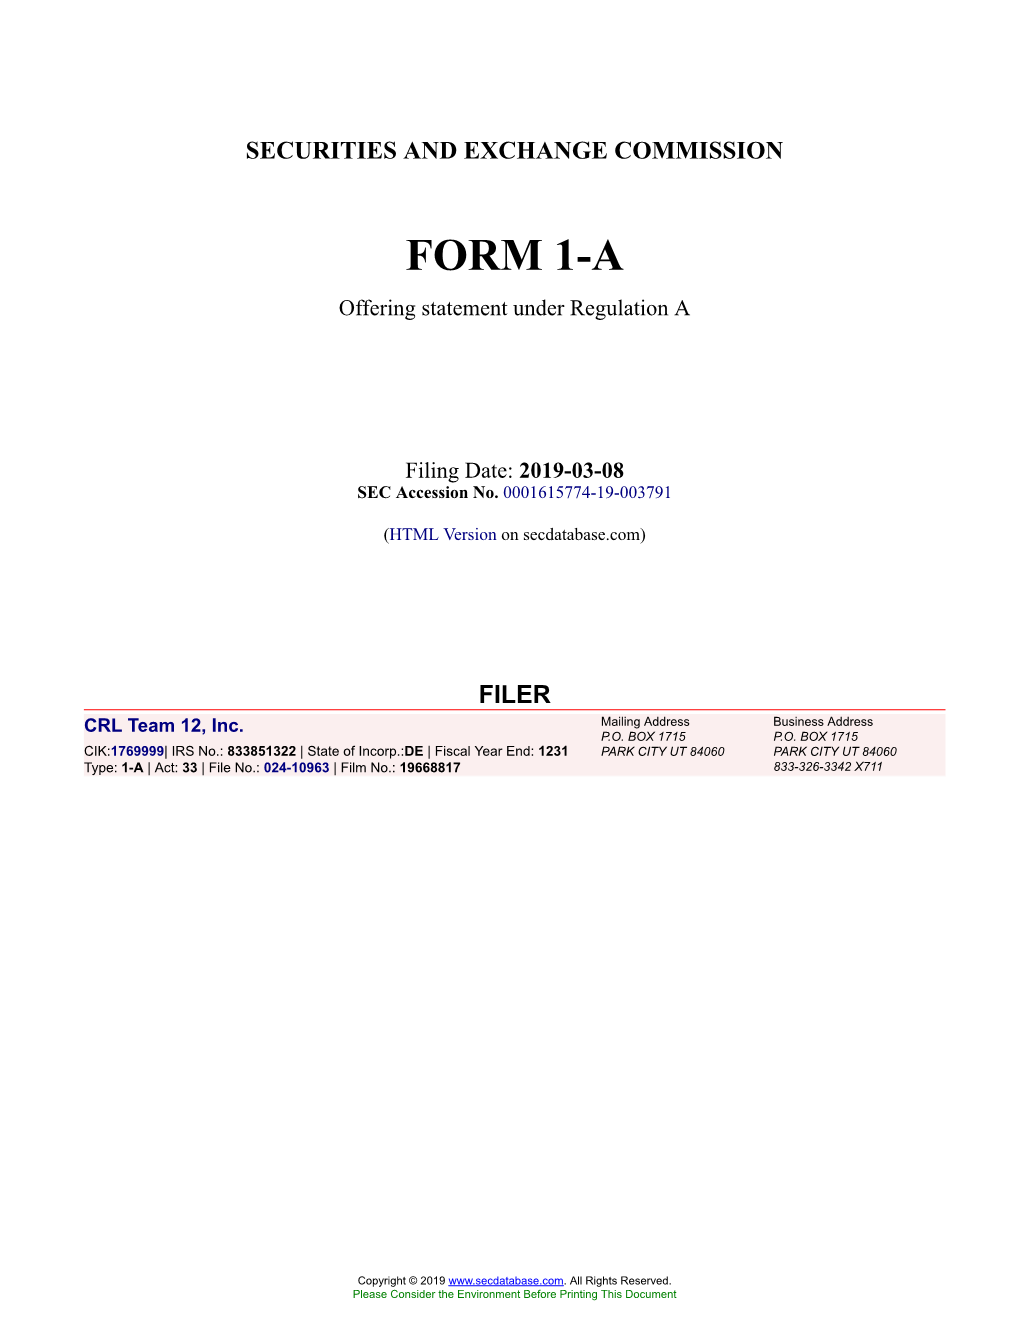 CRL Team 12, Inc. Form 1-A Filed 2019-03-08